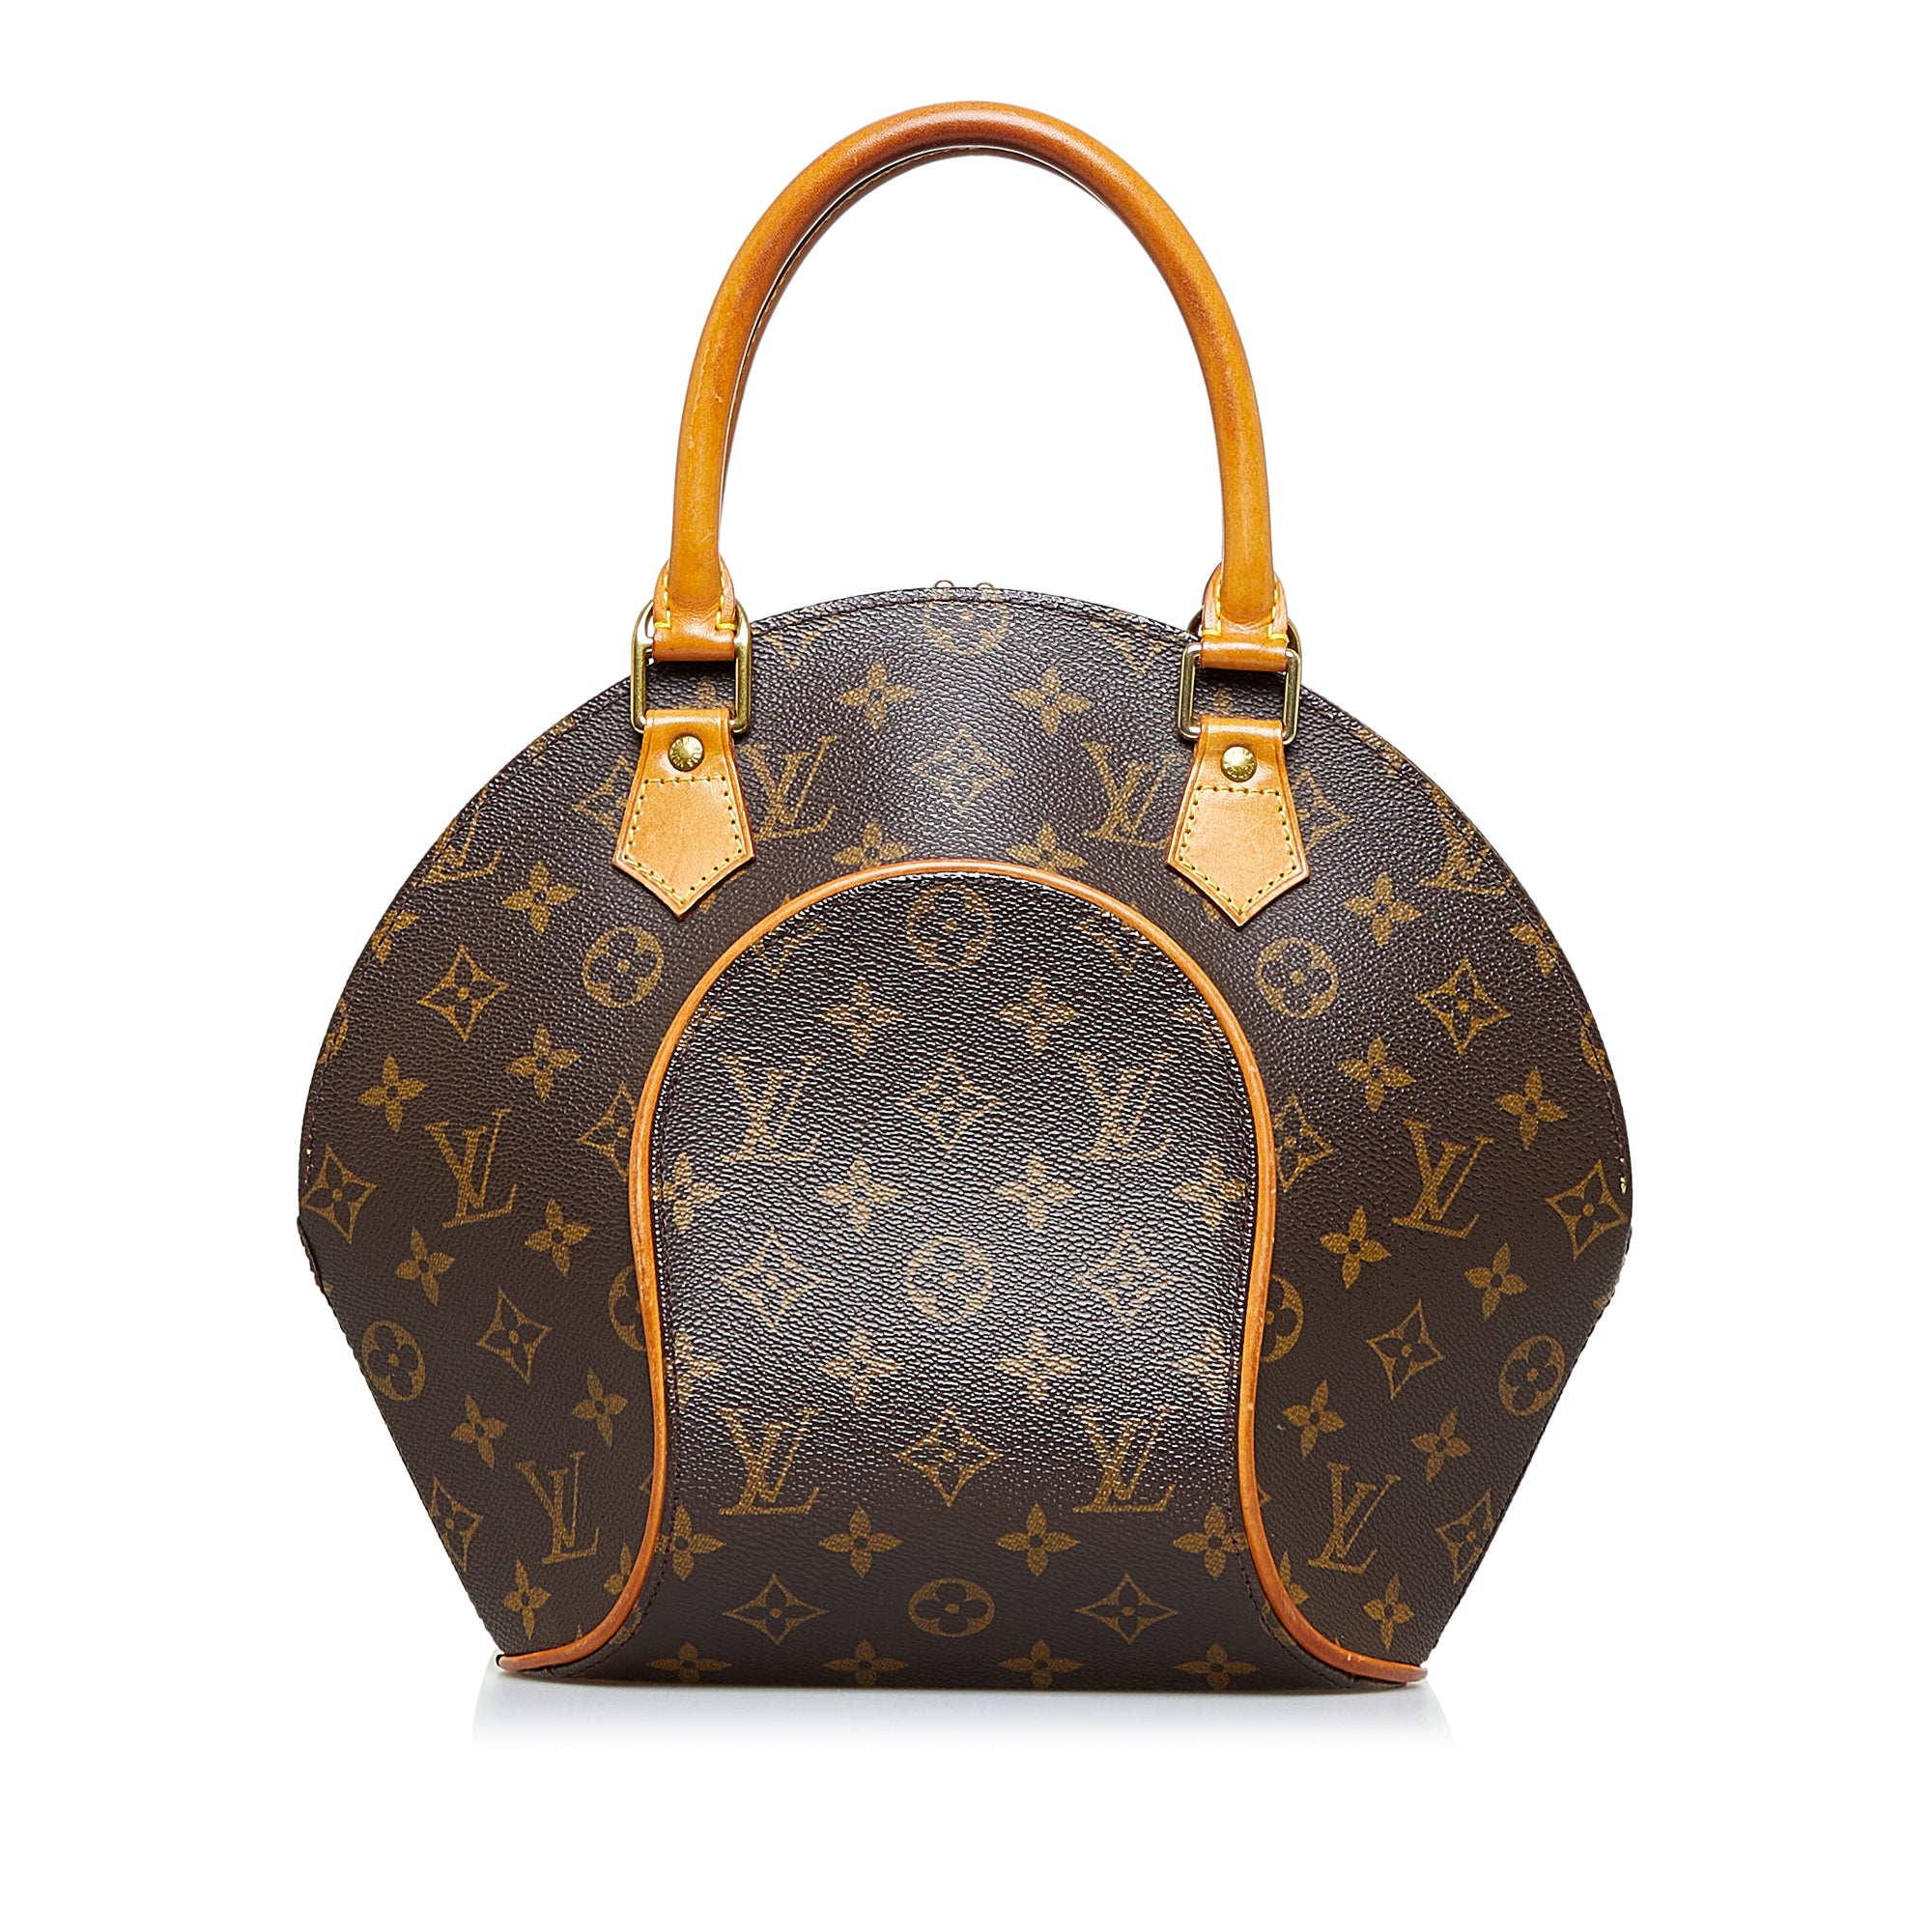 Pre-Owned Louis Vuitton Alma PM Monogram Handbag - Pristine Condition 